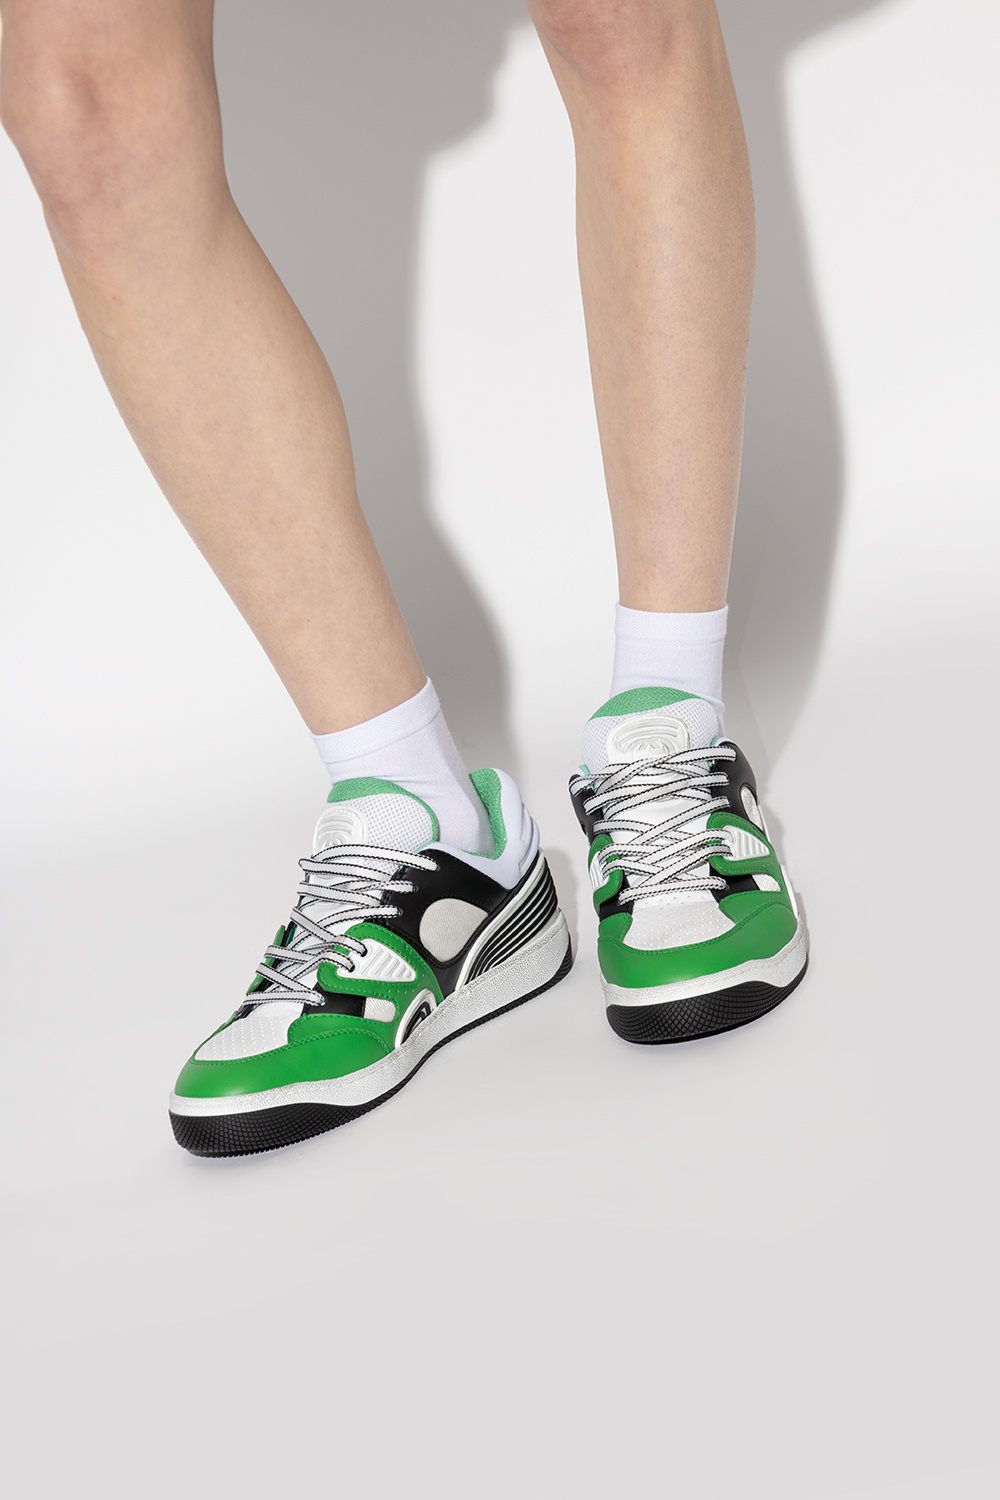 gucci web ‘Basket’ sneakers